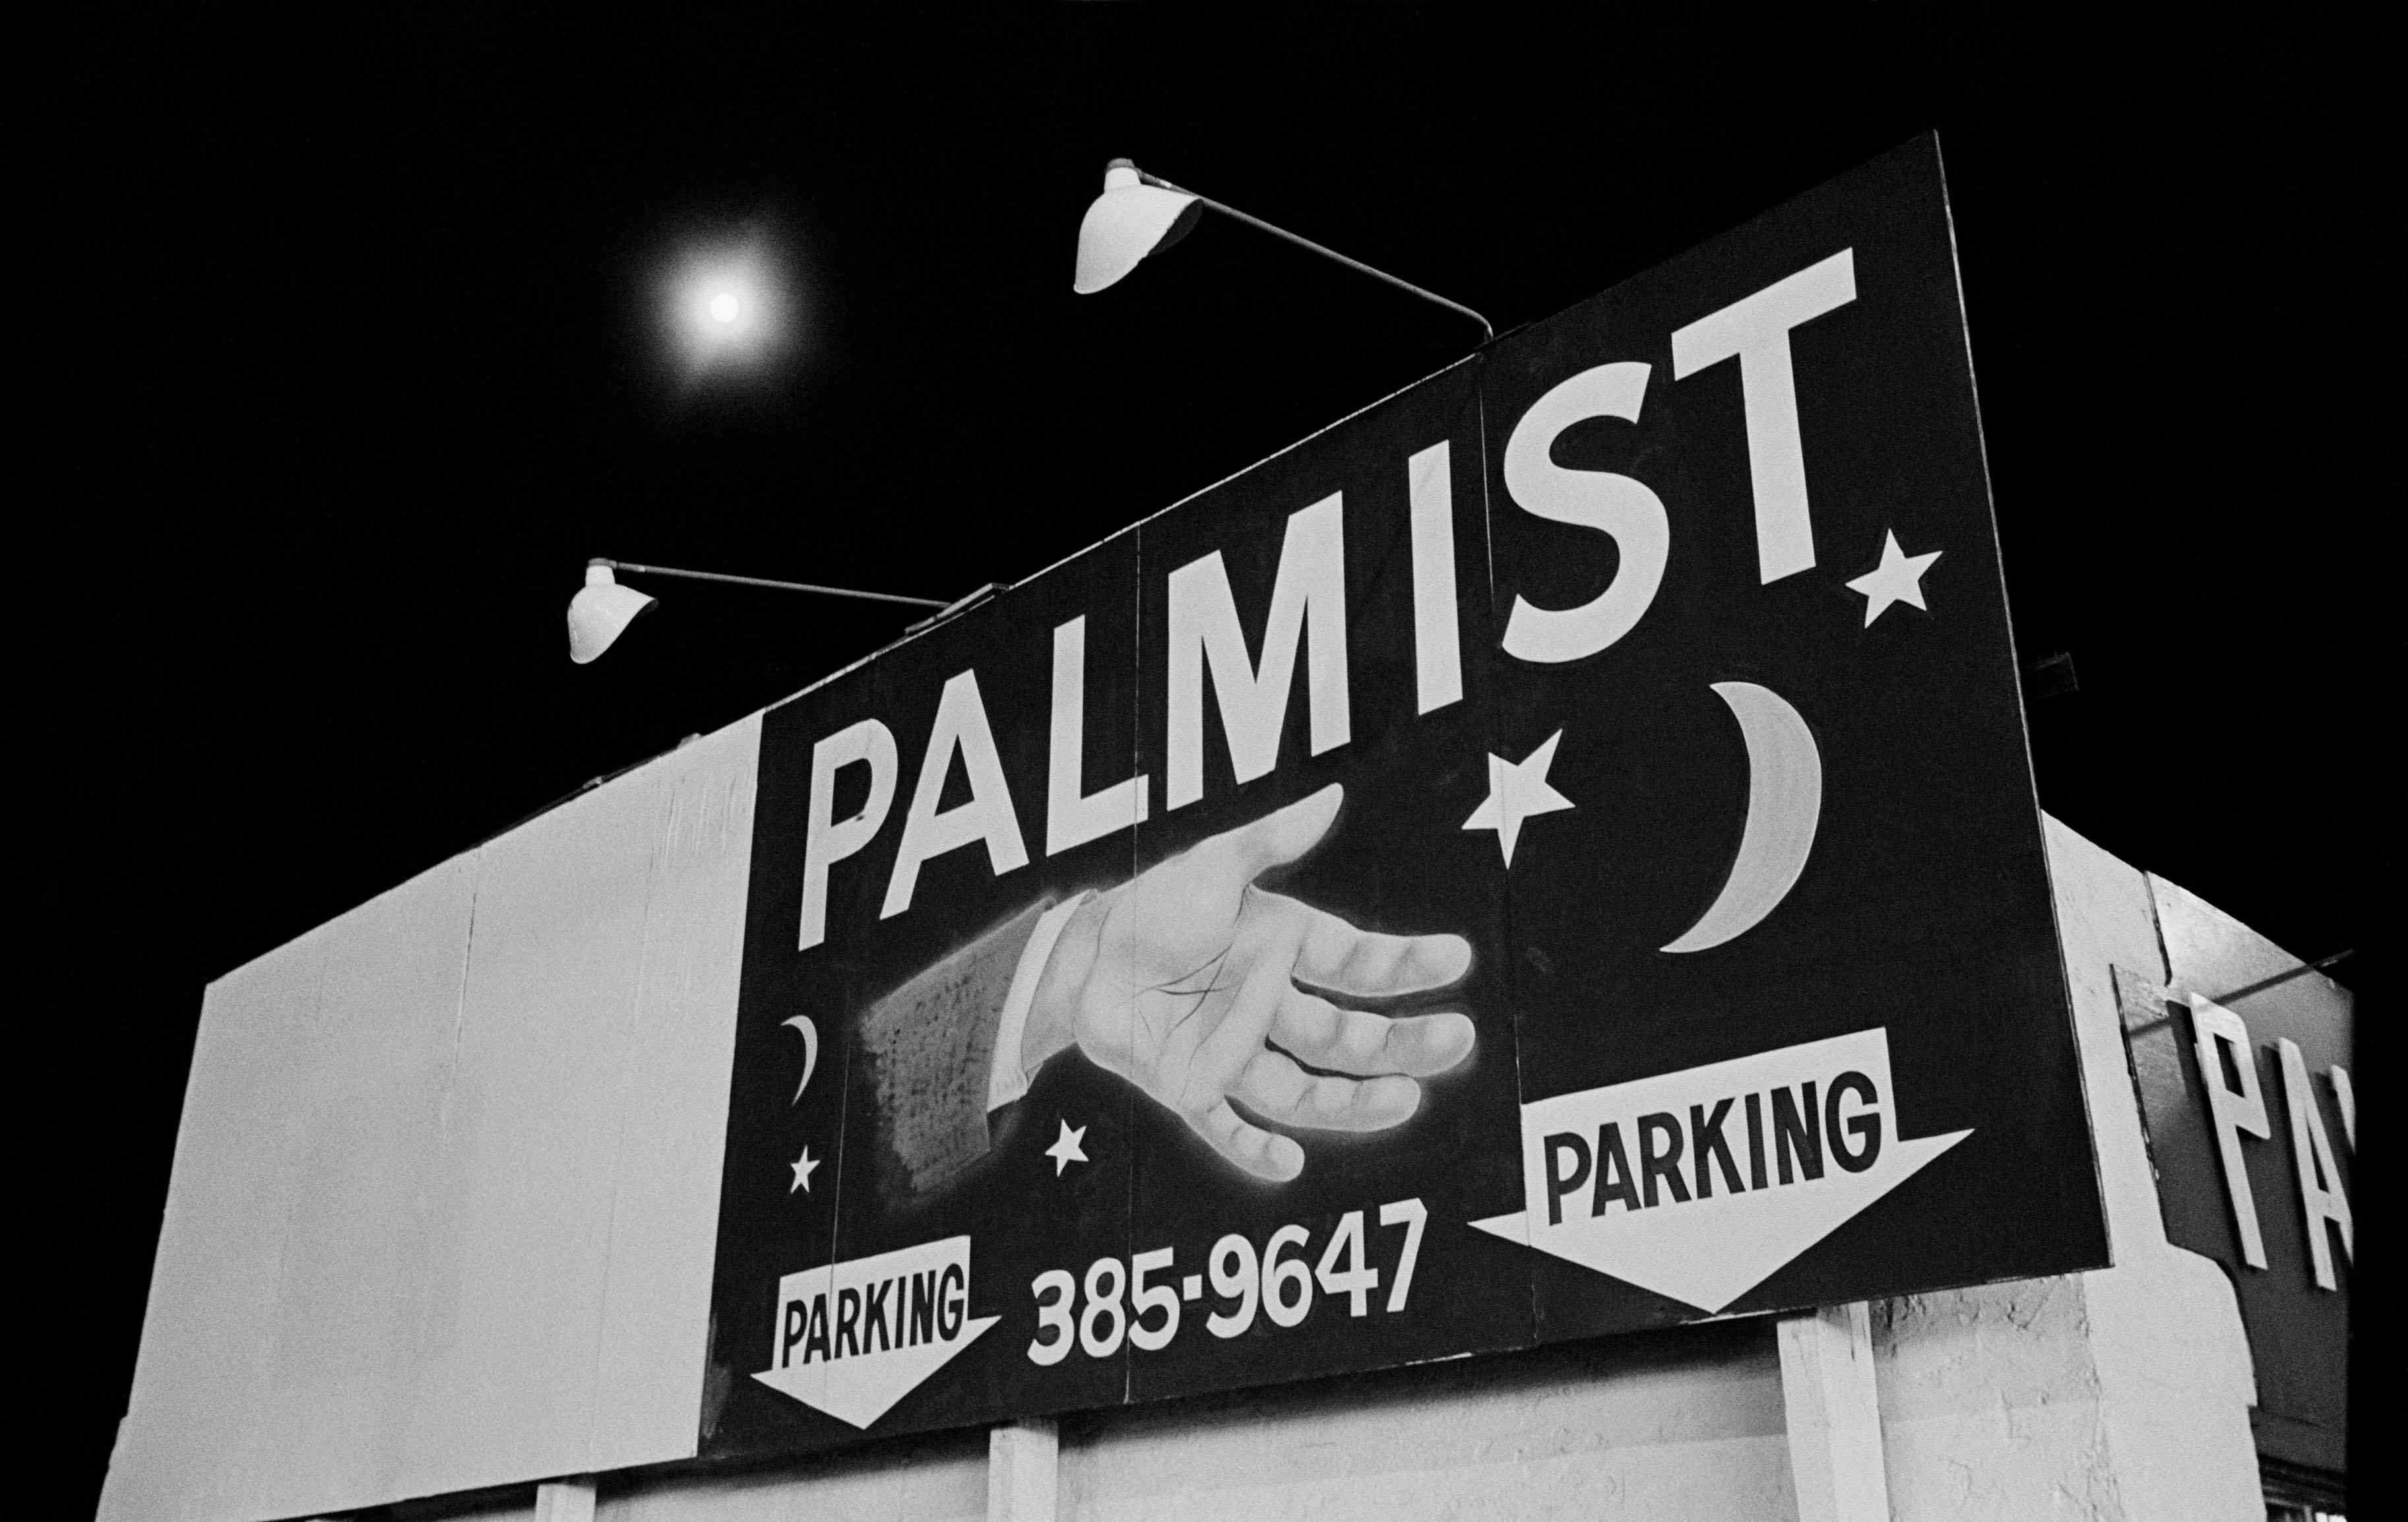 Michael Ormerod Black and White Photograph – Palmist - Straßenfotografie, Amerika, 20. Jahrhundert, Robert Frank, Surreal